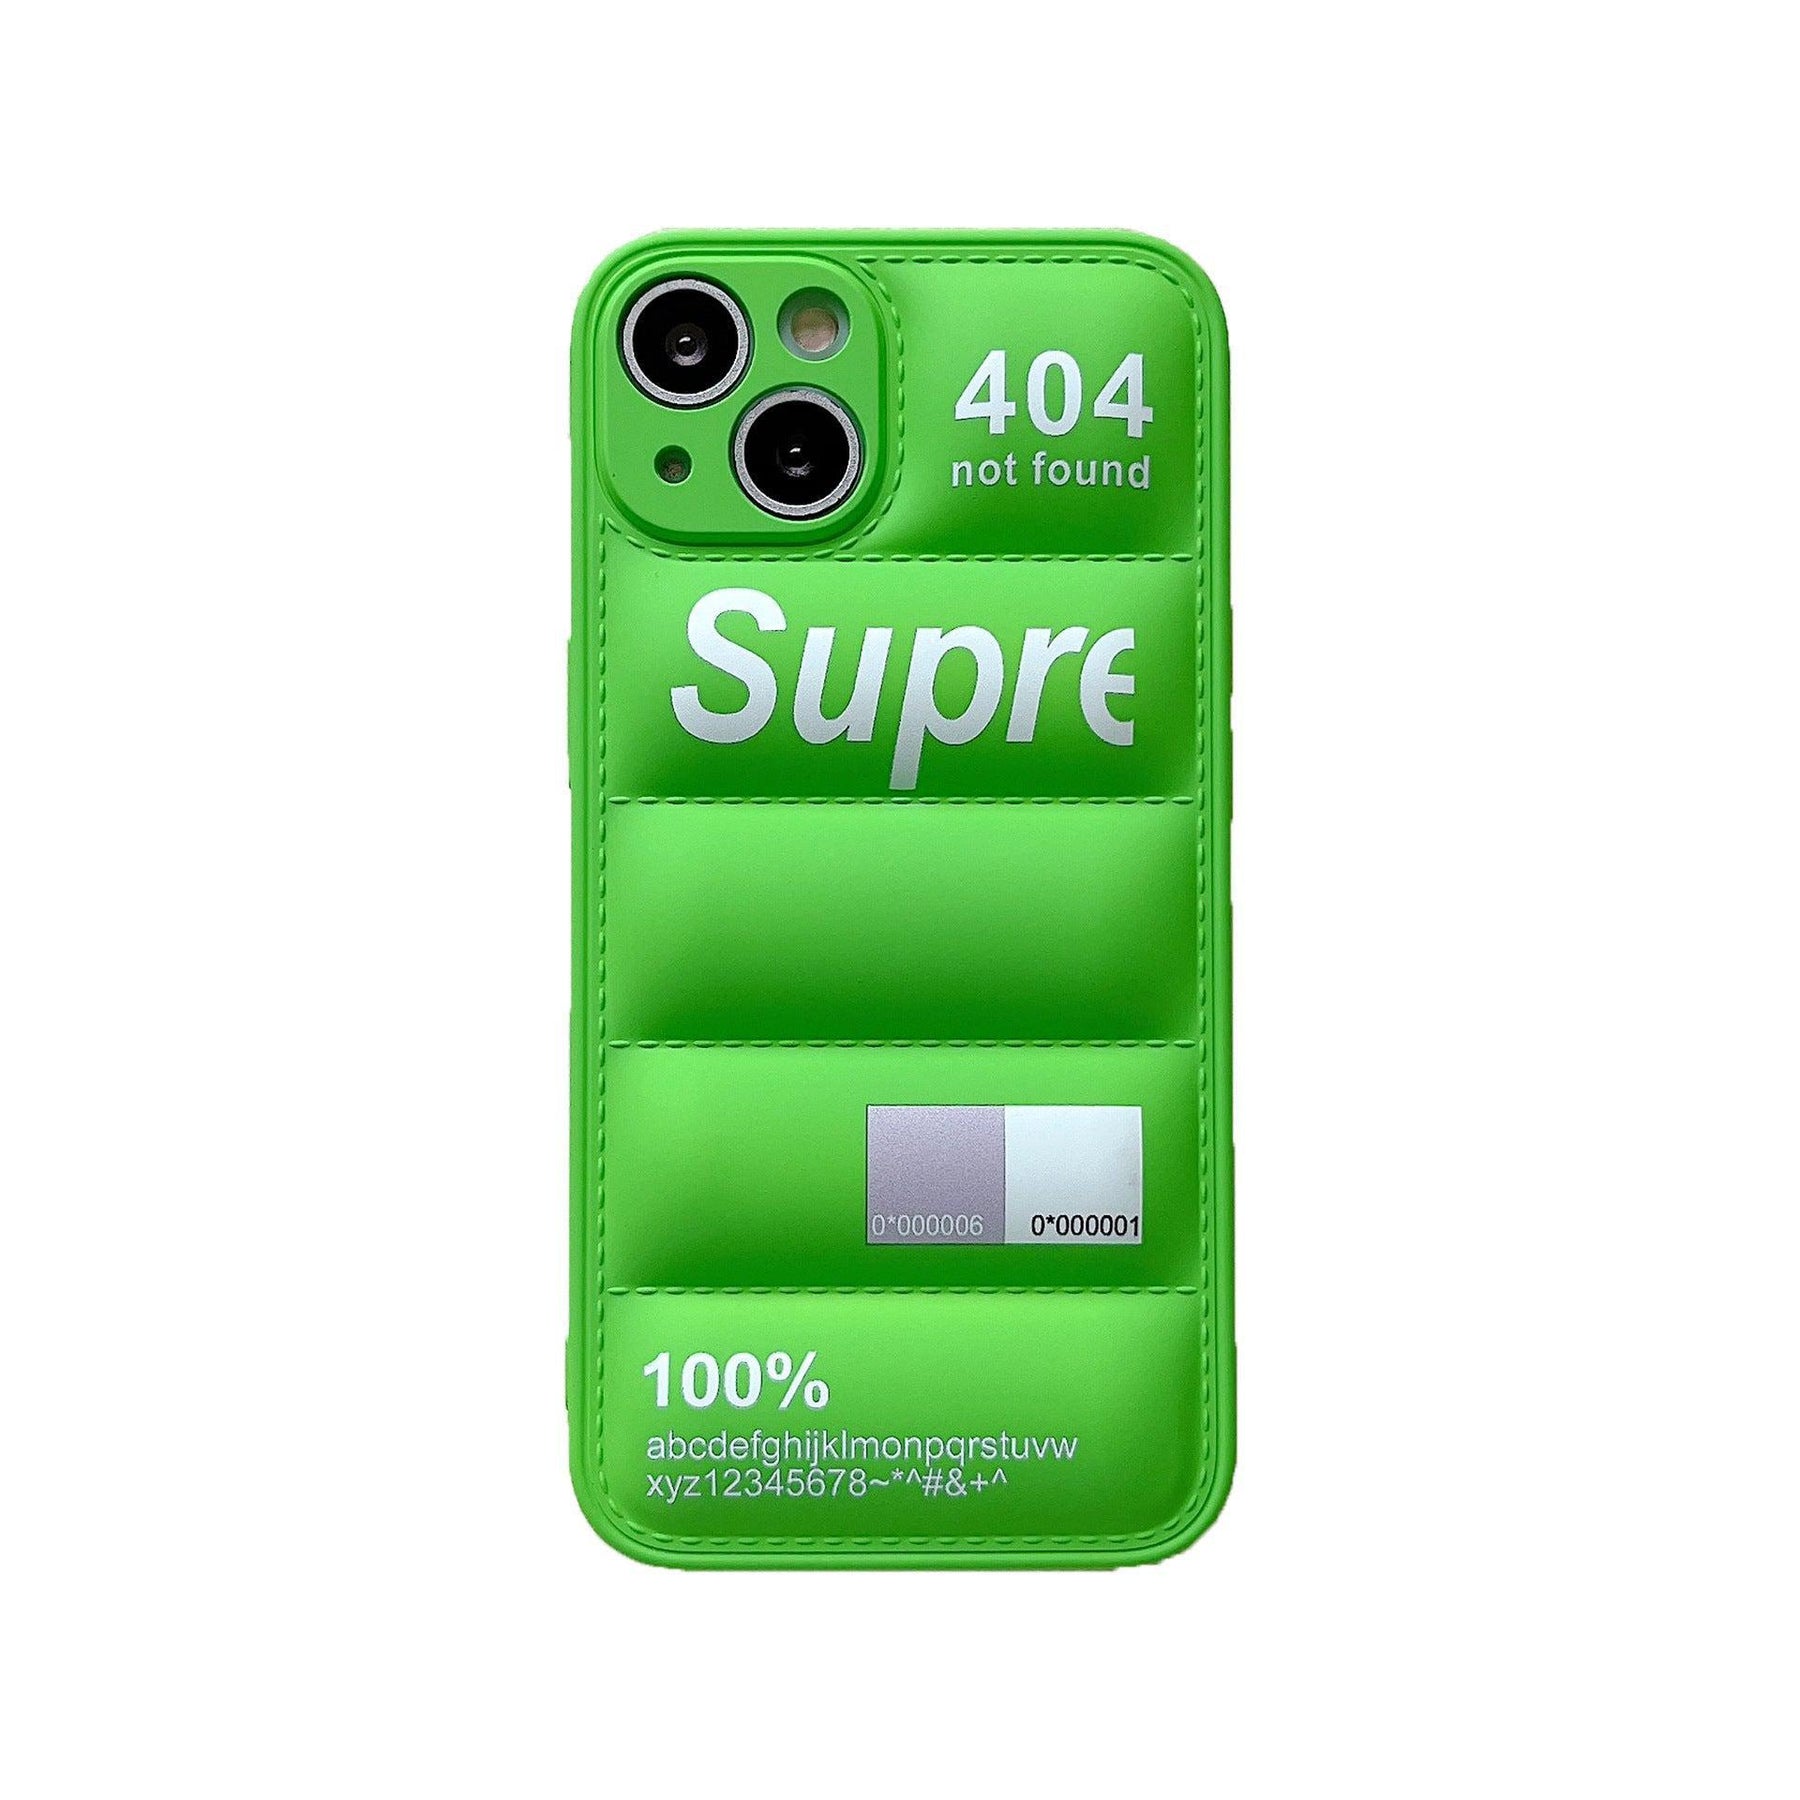 Supre iPhone Case